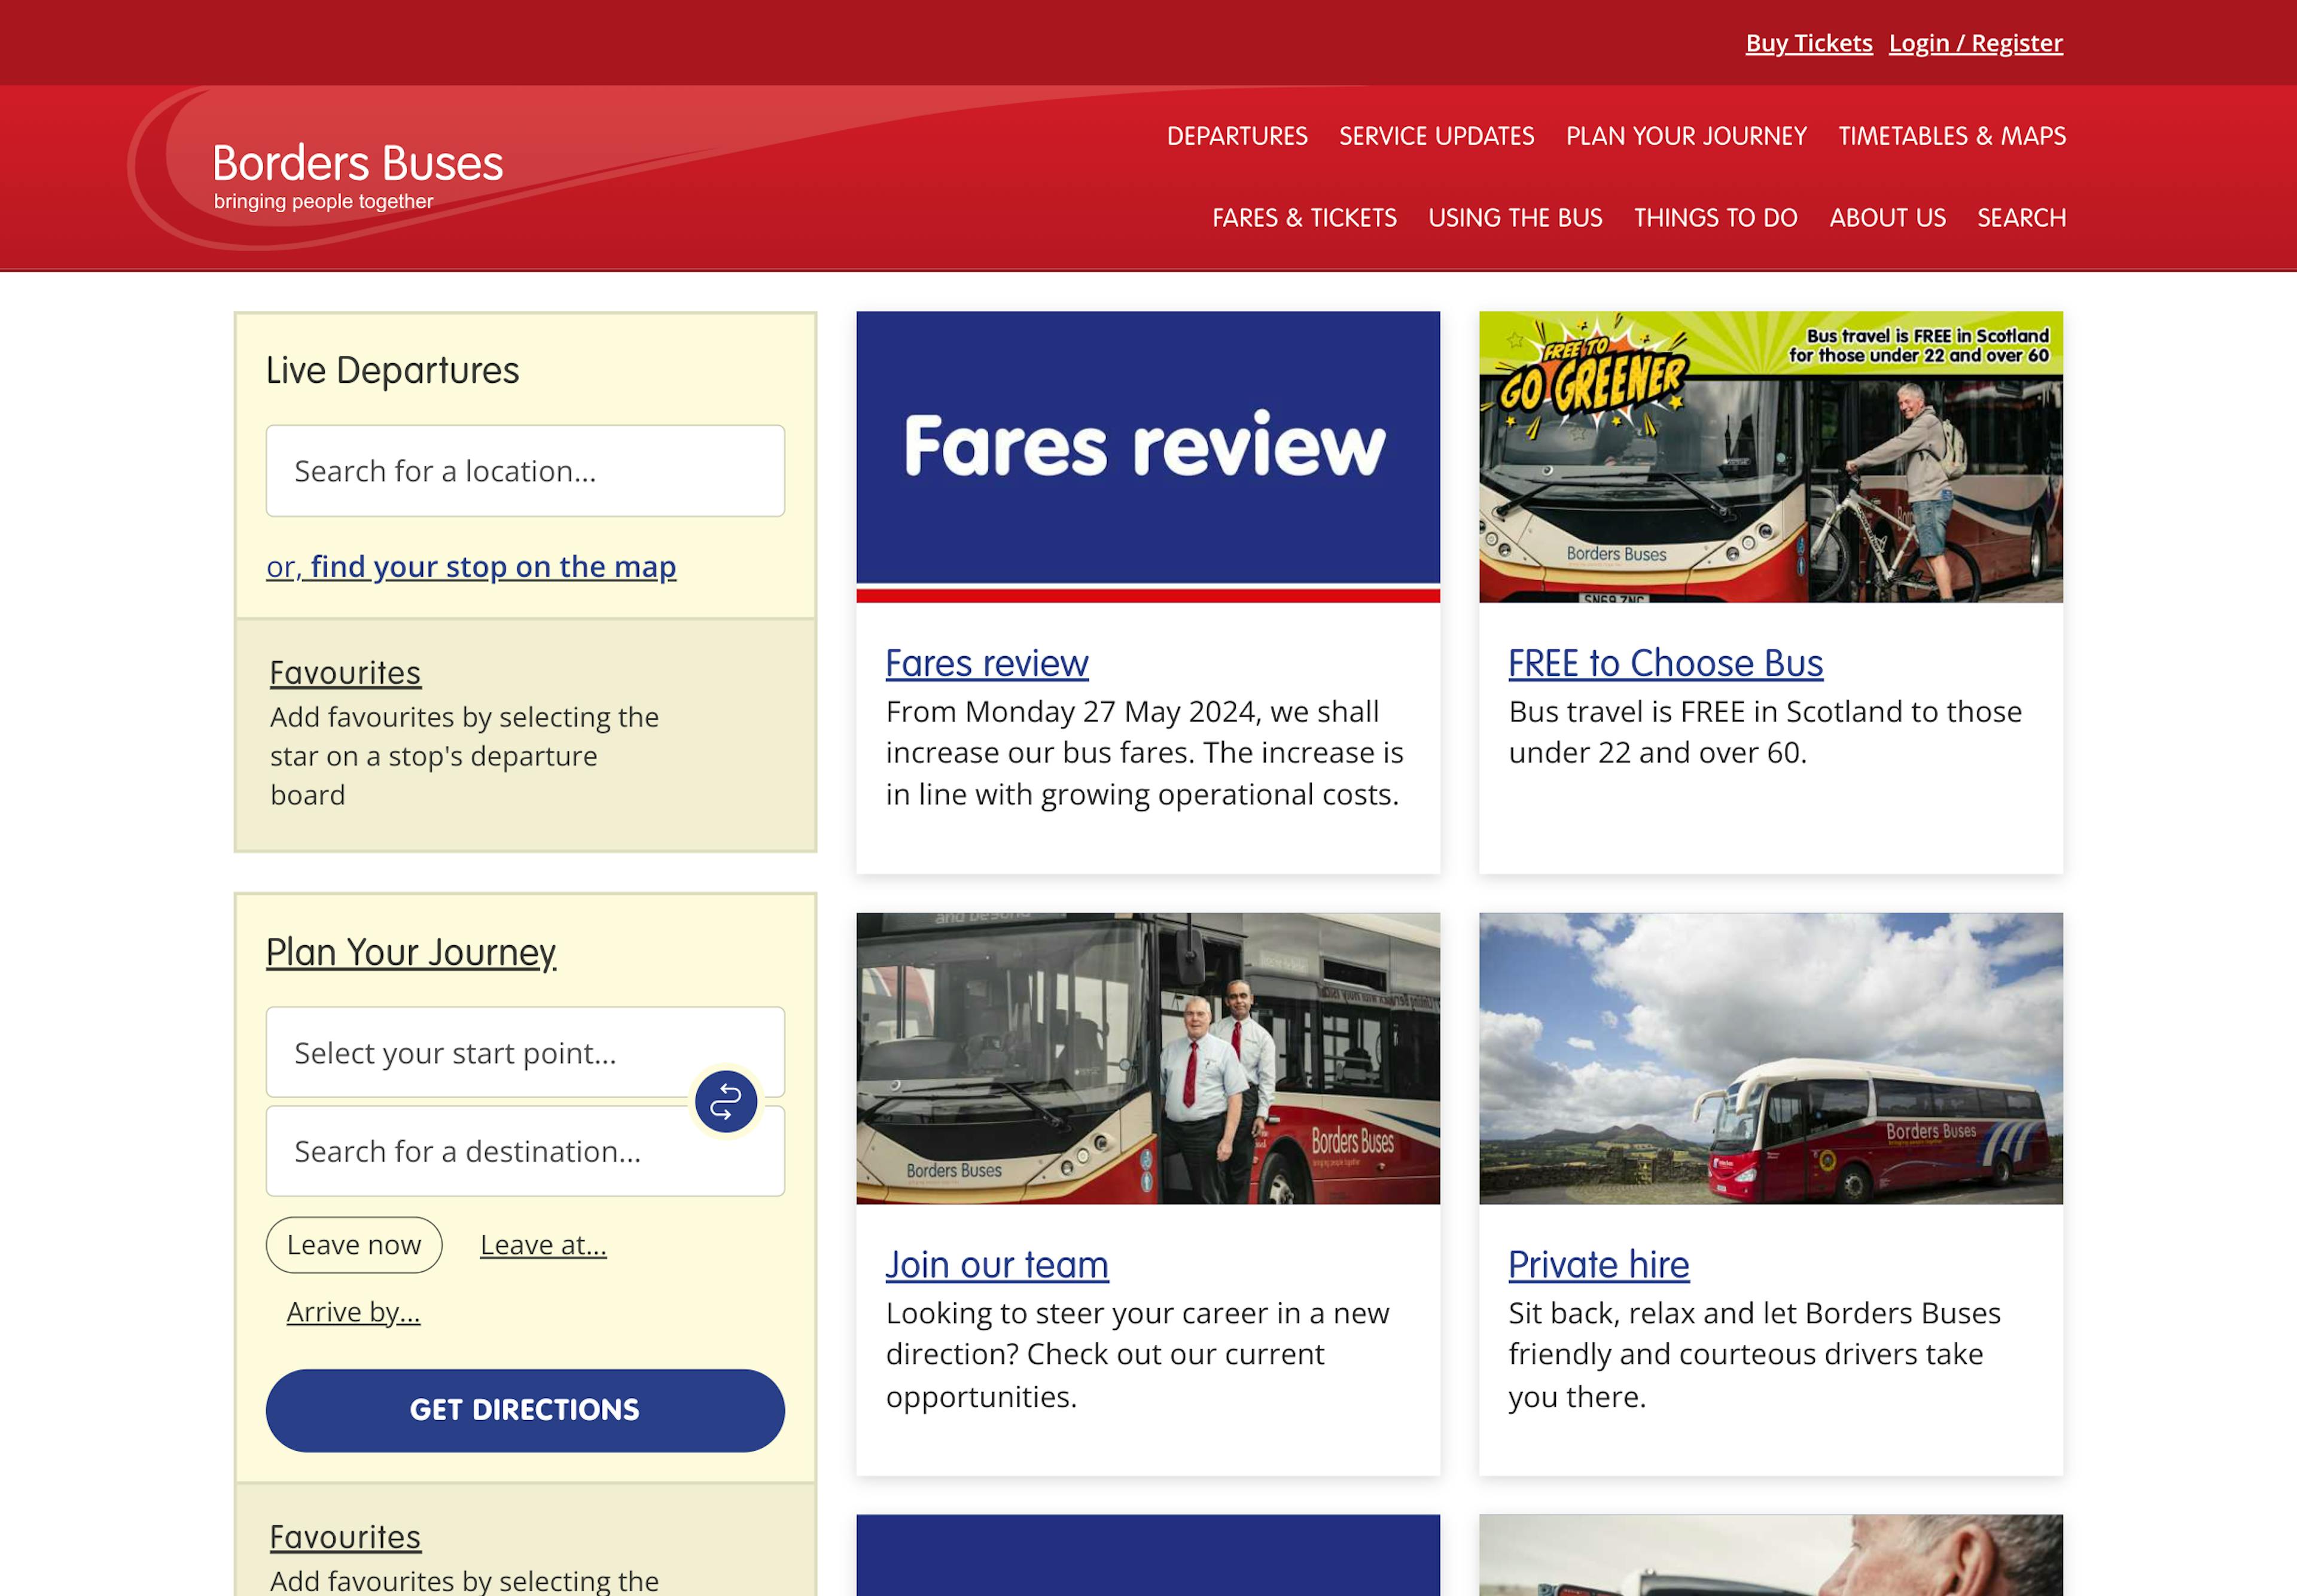 A screenshot of the Borders Buses homepage